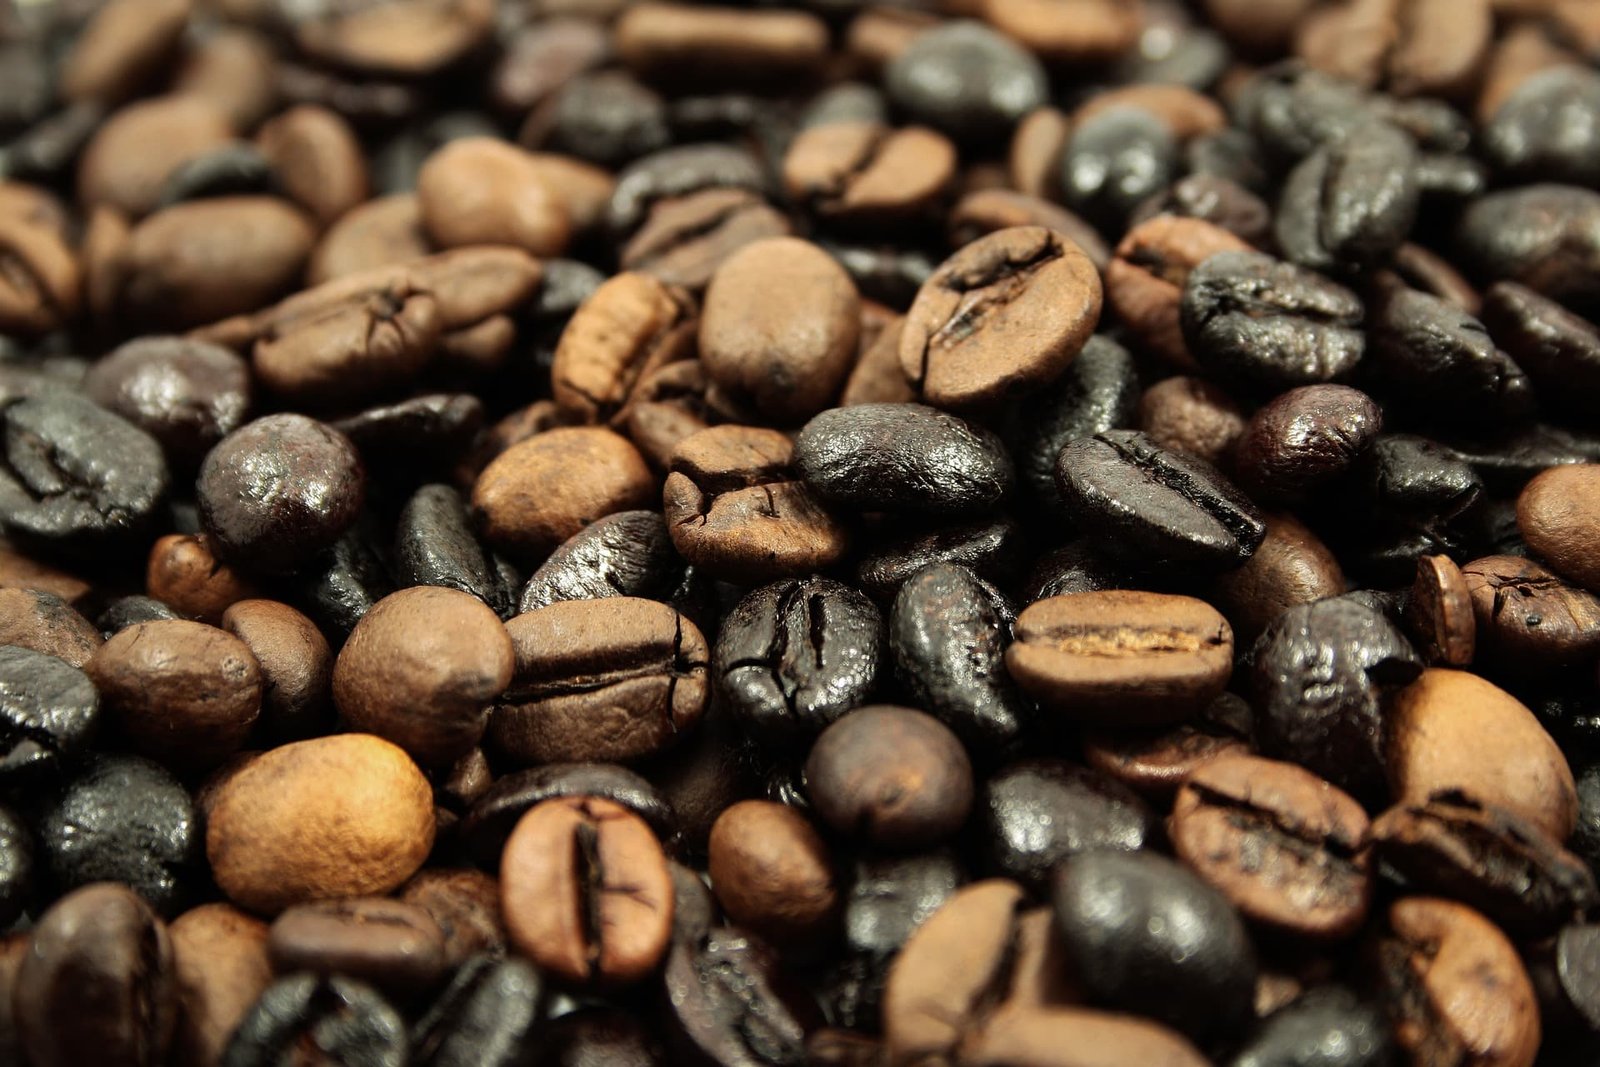 Medium and dark roast coffee beans